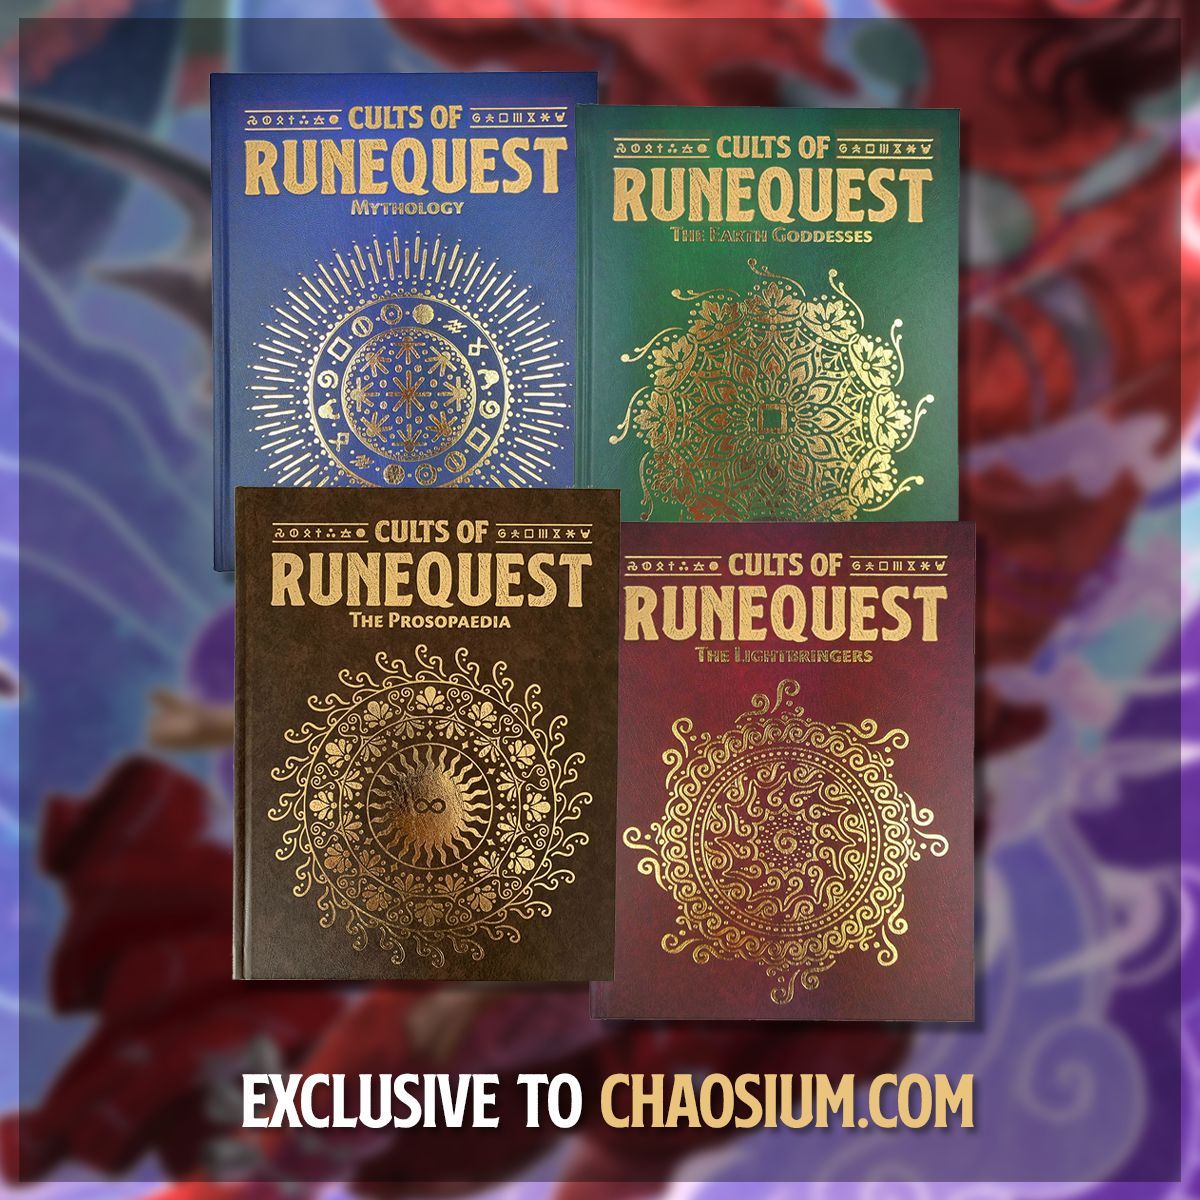 Cults of RuneQuest Leatherette